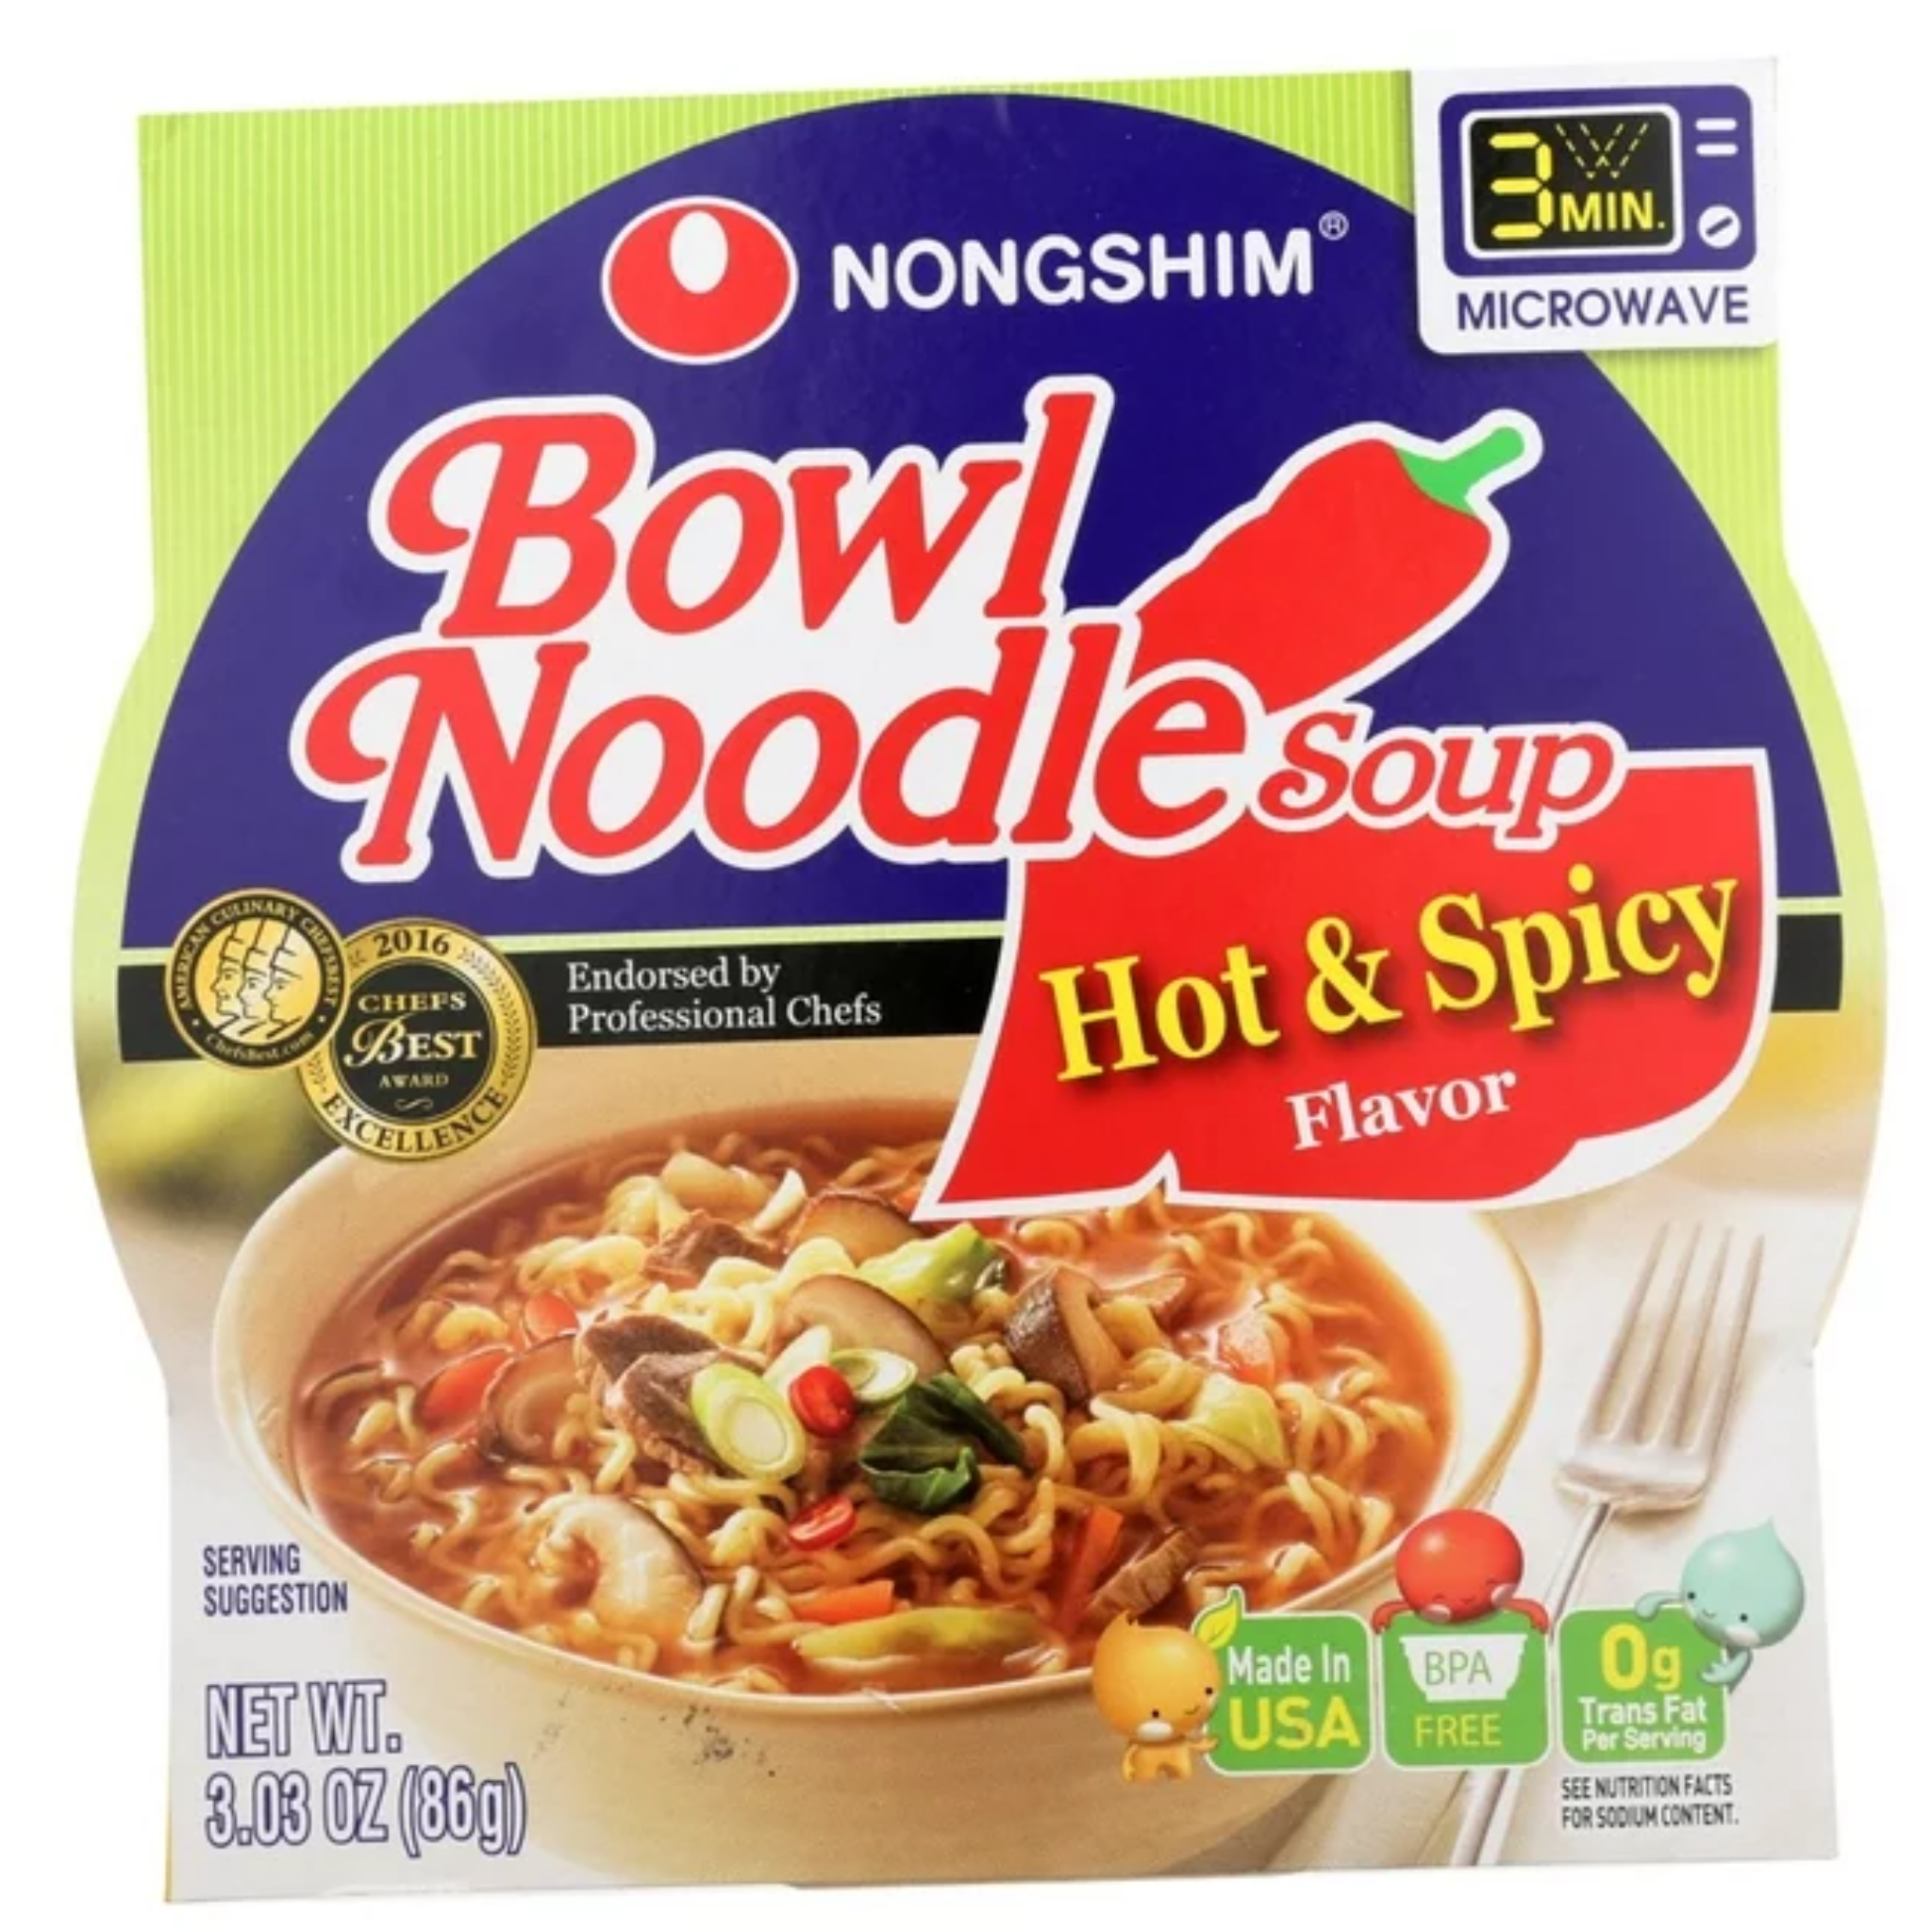 Nongshim Hot & Spicy Bowl Noodles